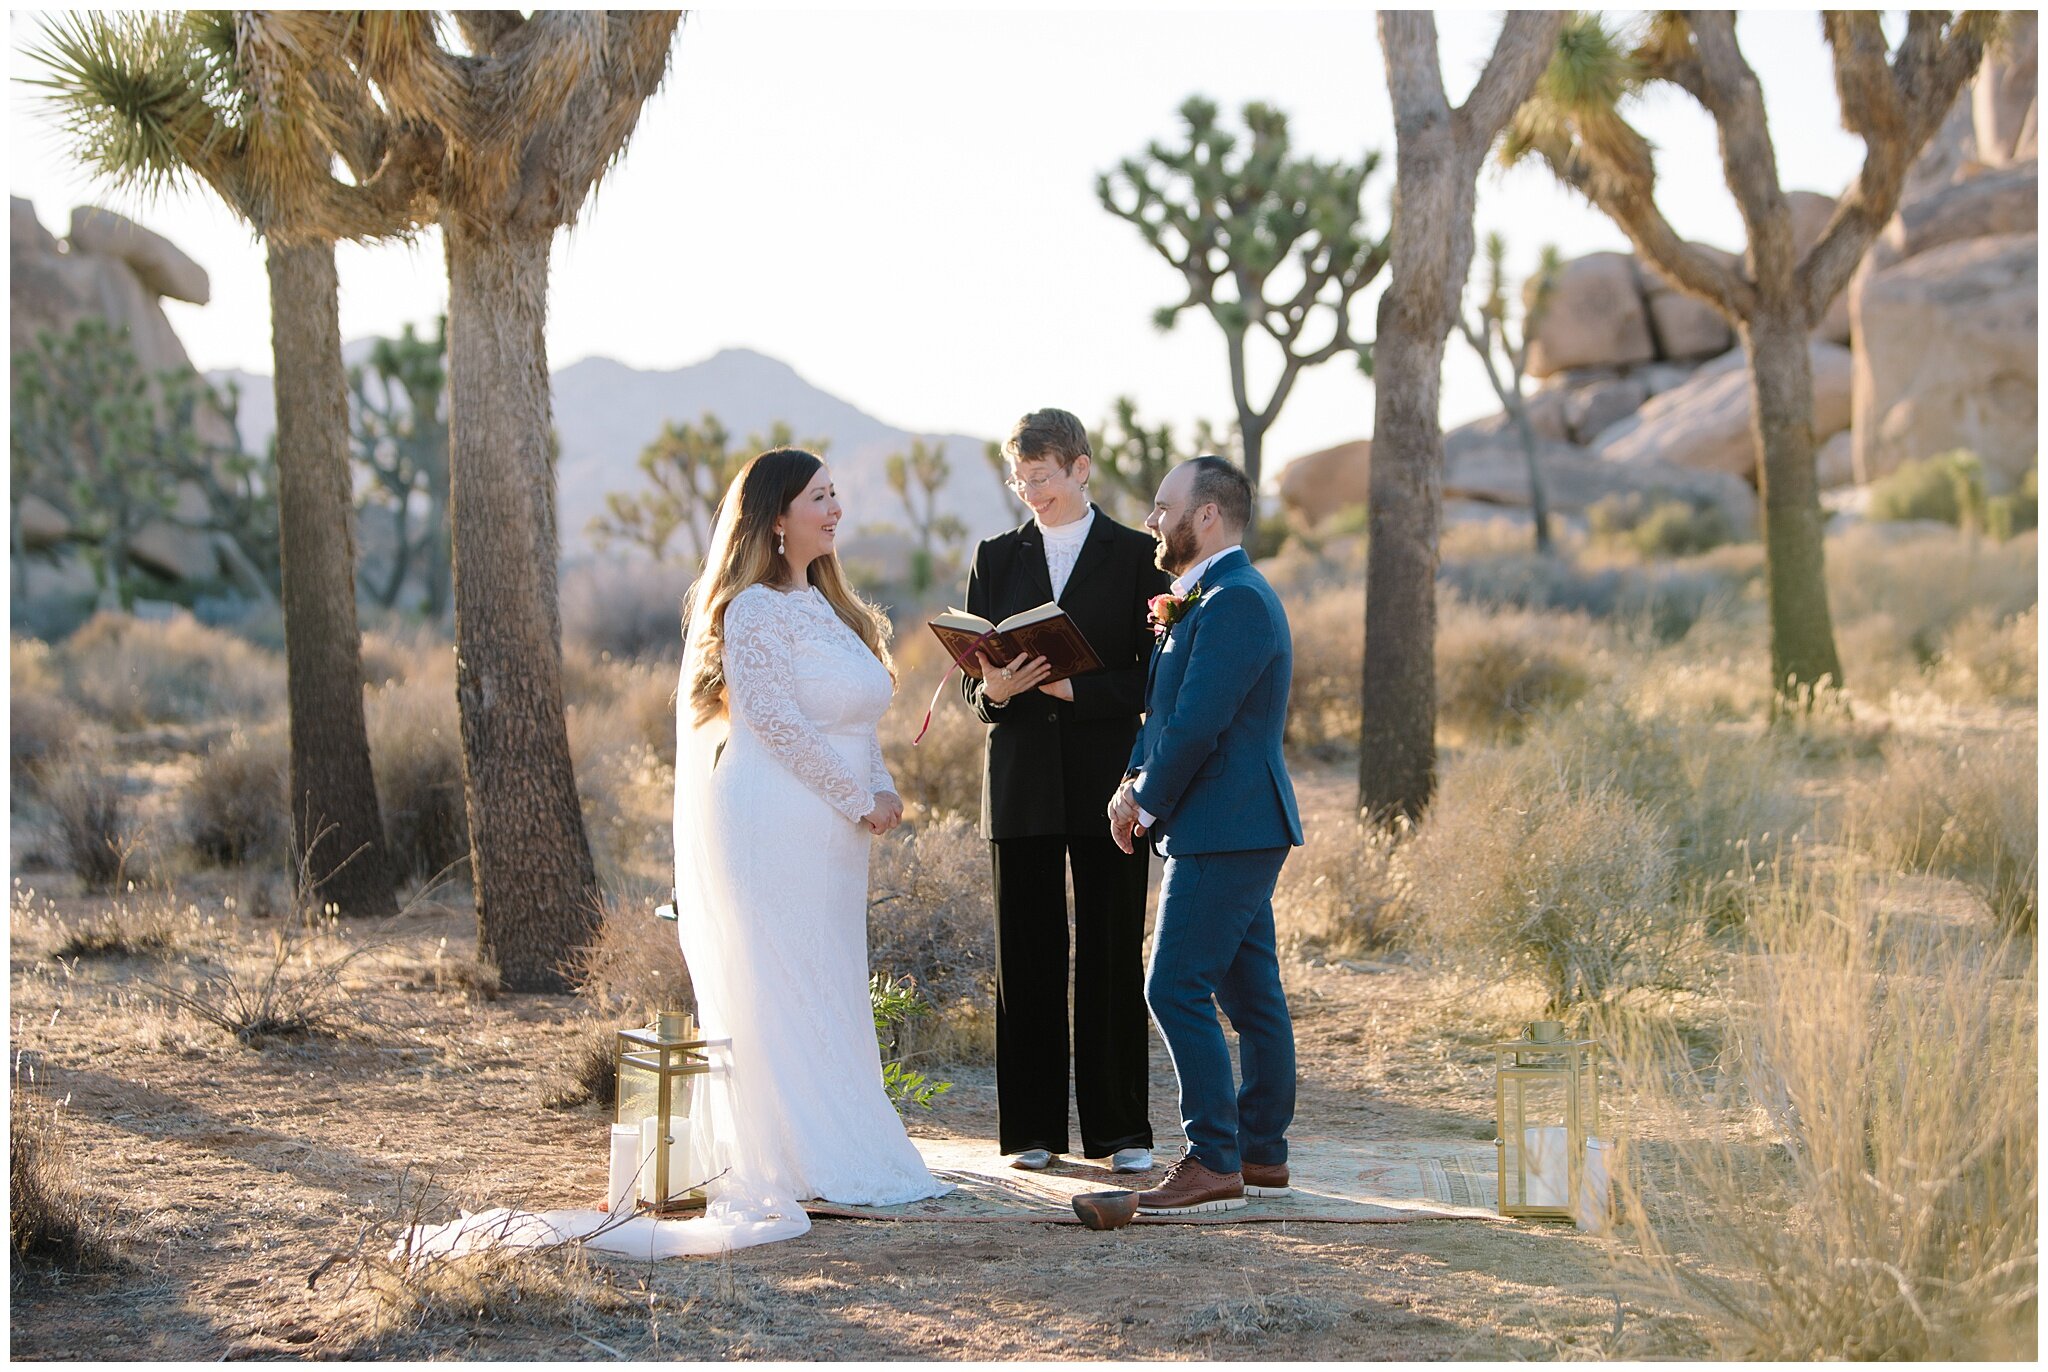 Joshua Tree Elopement - Michelle and Michael - Adventure Wedding Photographer_0046.jpg